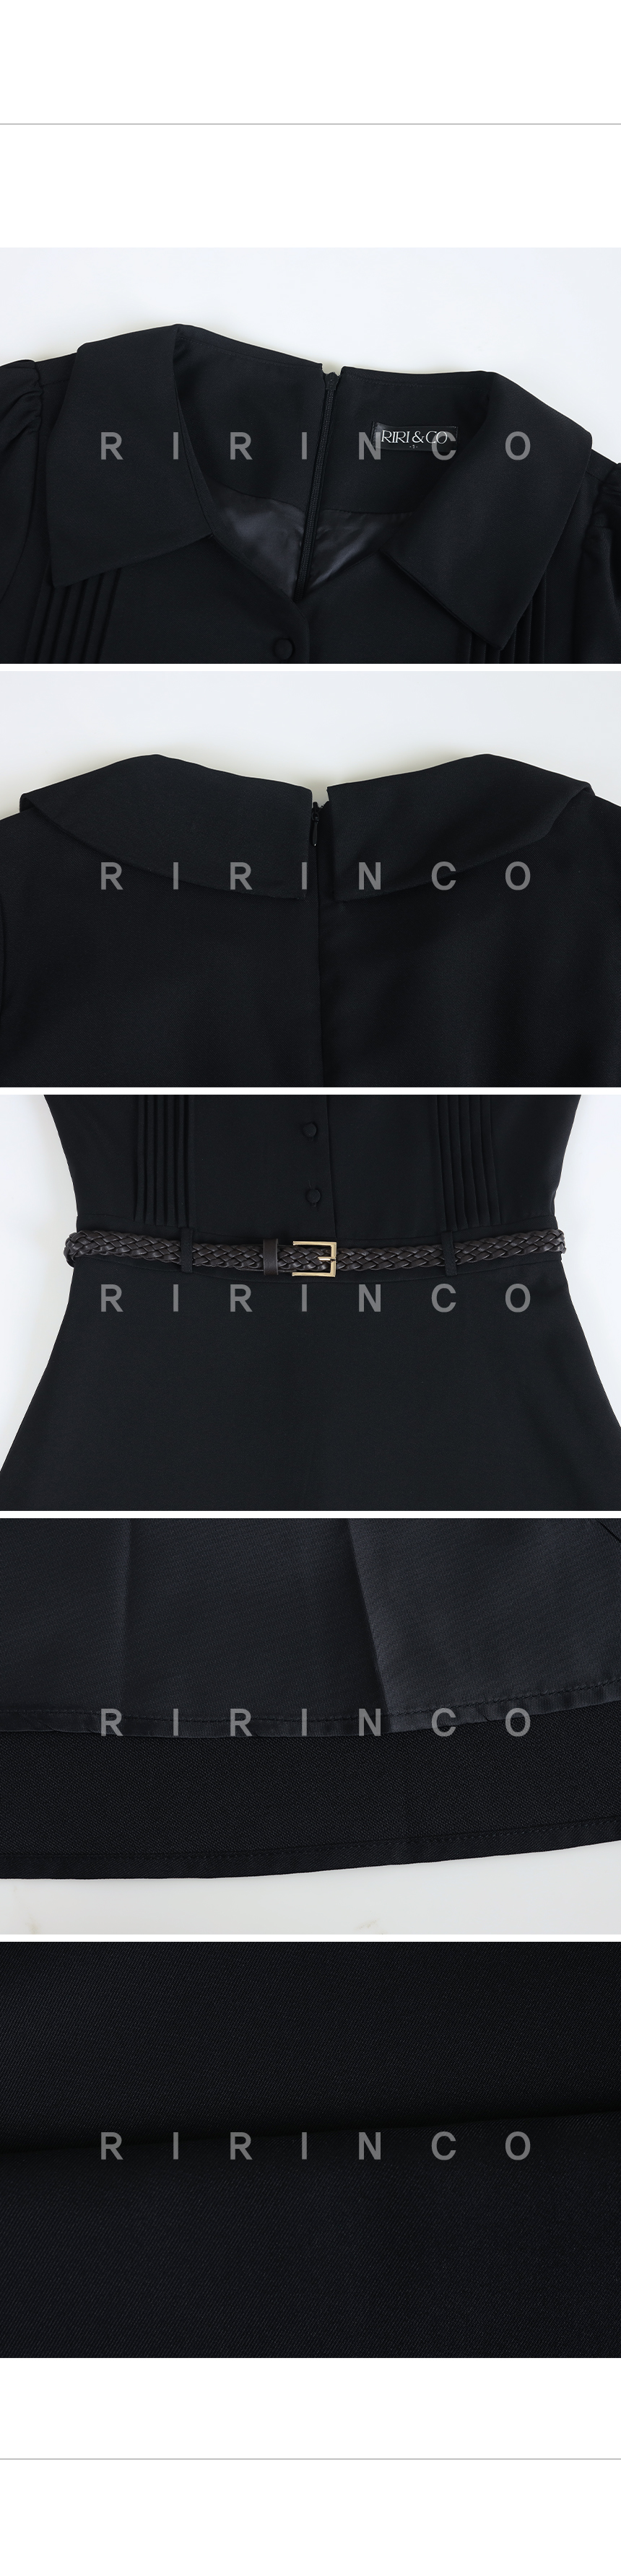 RIRINCO オープンカラーパフ袖ベルト付きワンピース